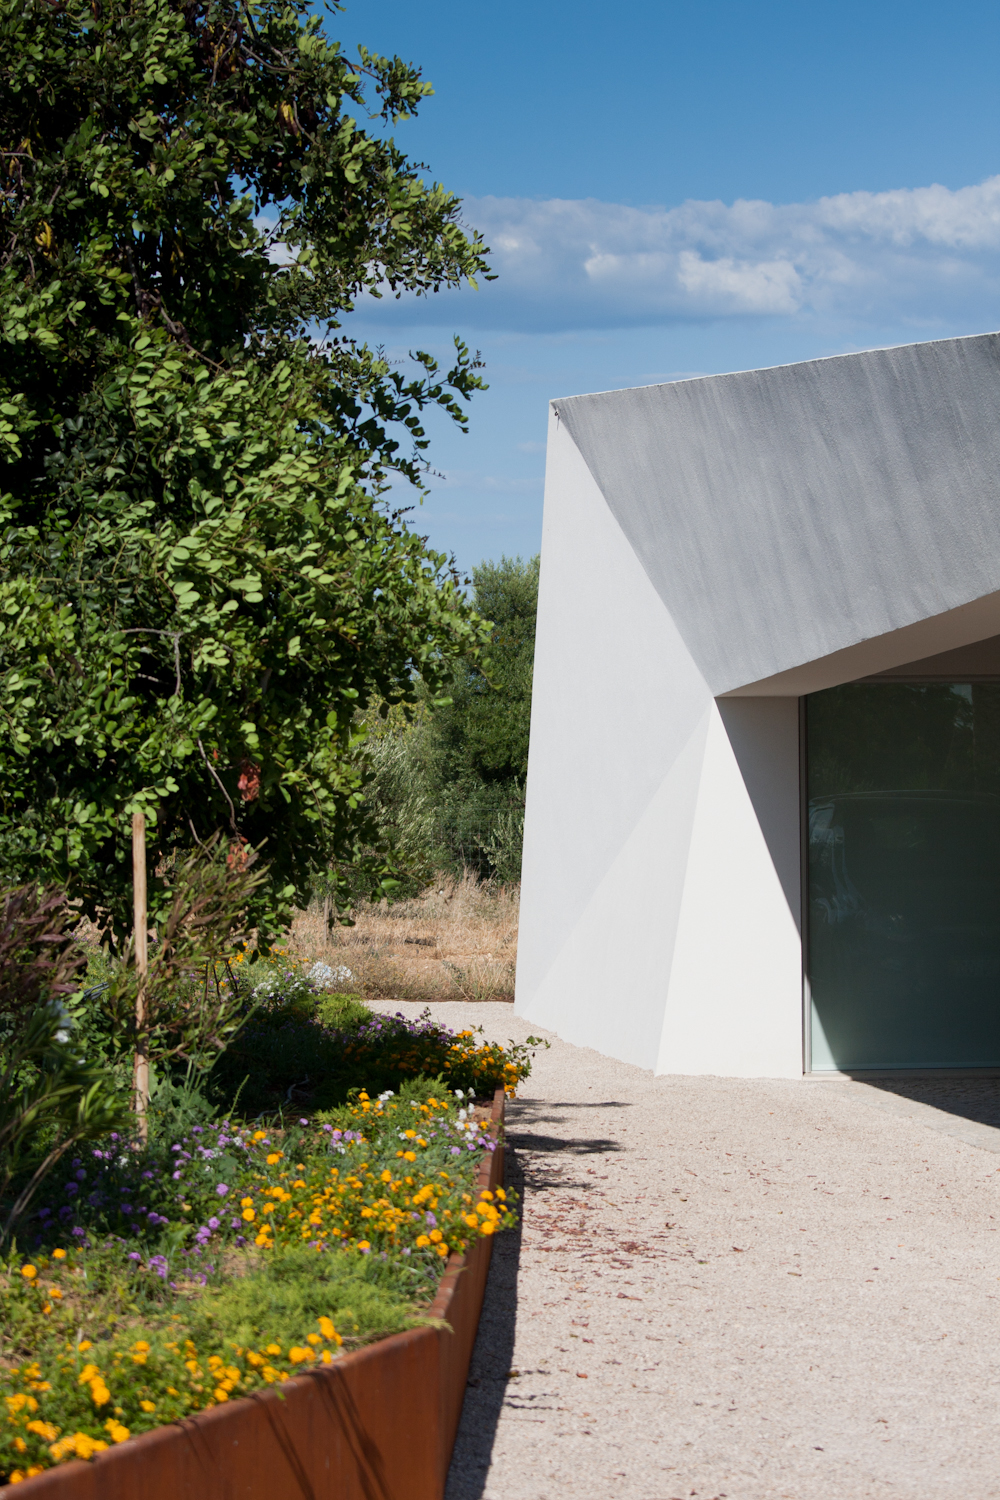 Portugal  algarve  tavira  Arquitectura  casa  house  mediterraneo  Mediterranean south